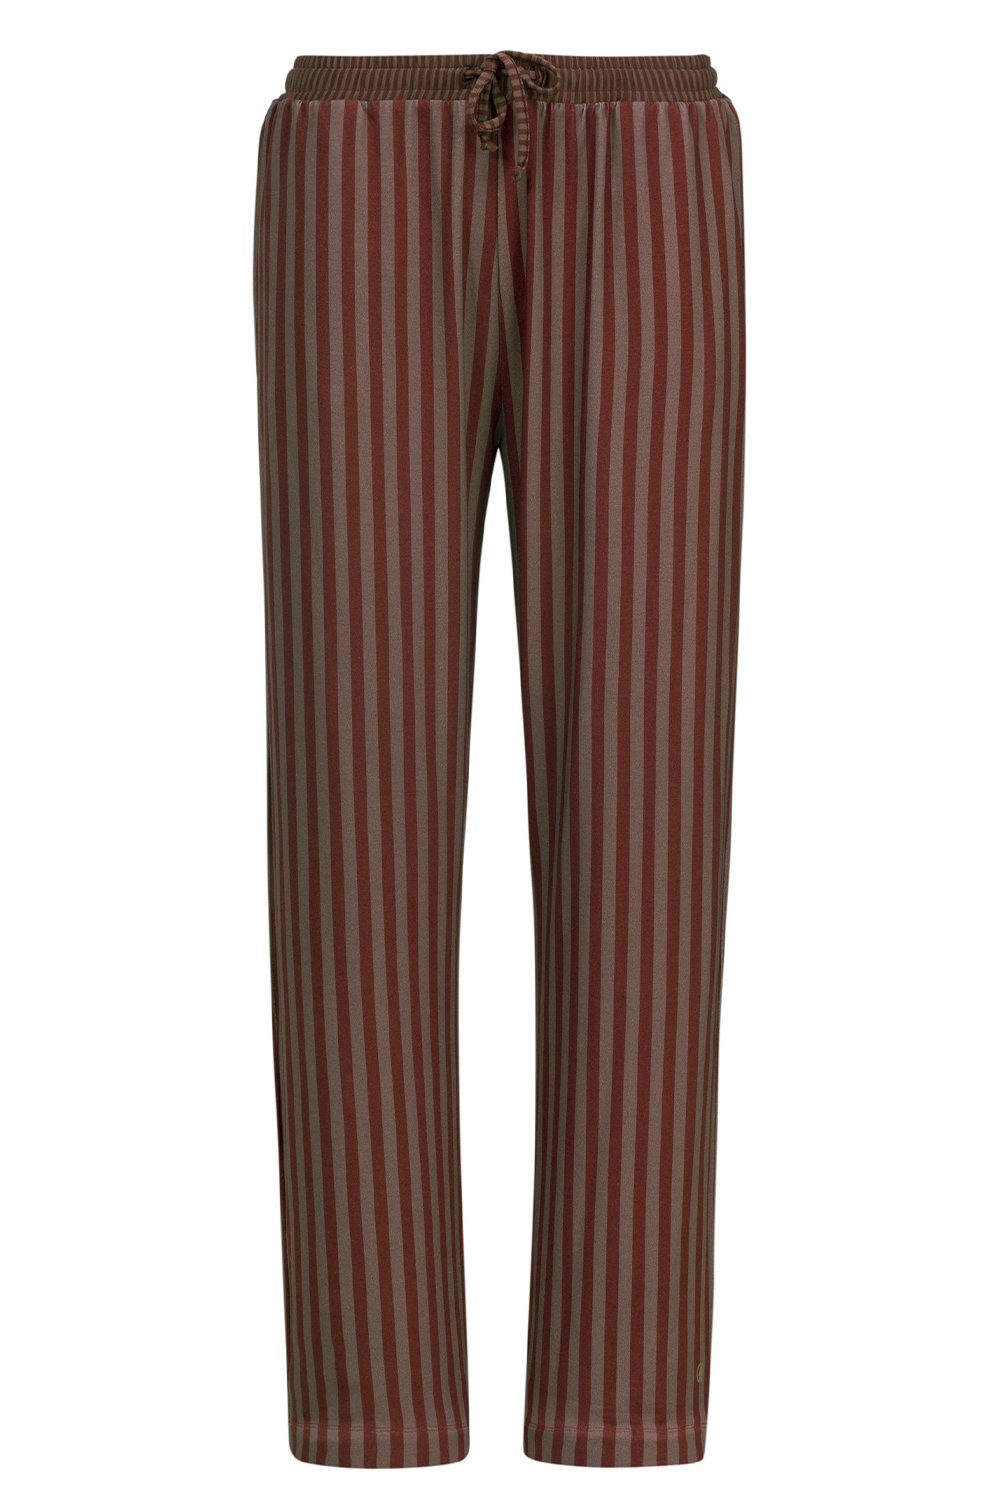 PiP Studio Loungehose Belin Sumo Stripe Trousers Long 51500718-734 brown/red